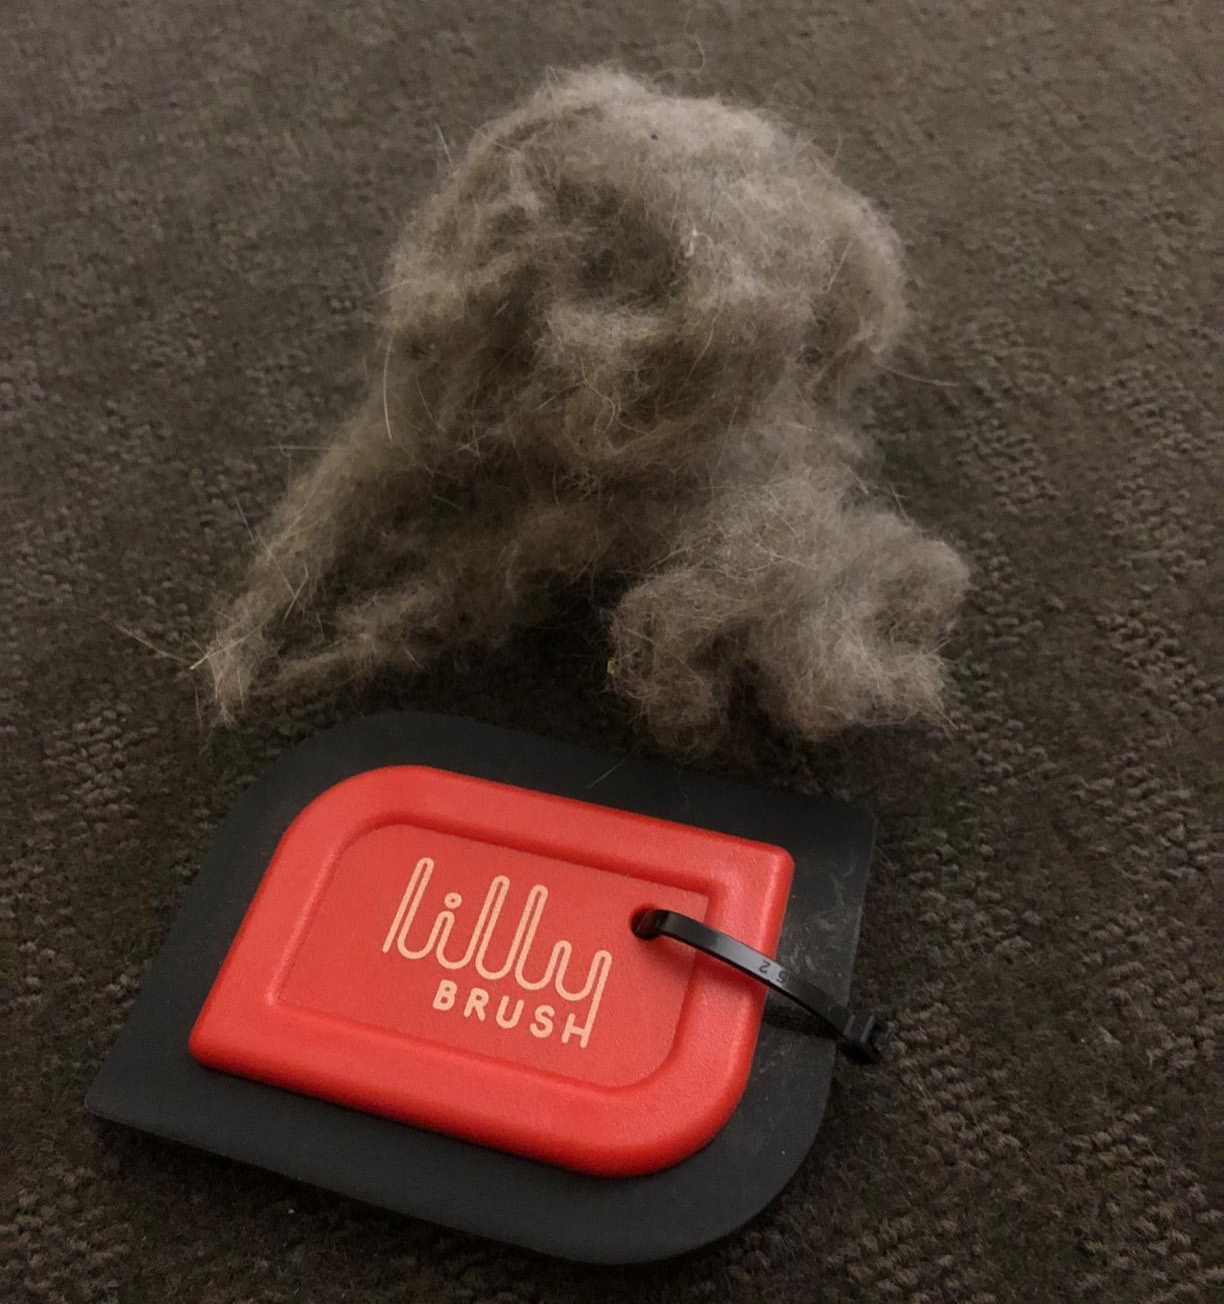 Lilly Brush Mini Pet Hair Detailer review - The Gadgeteer